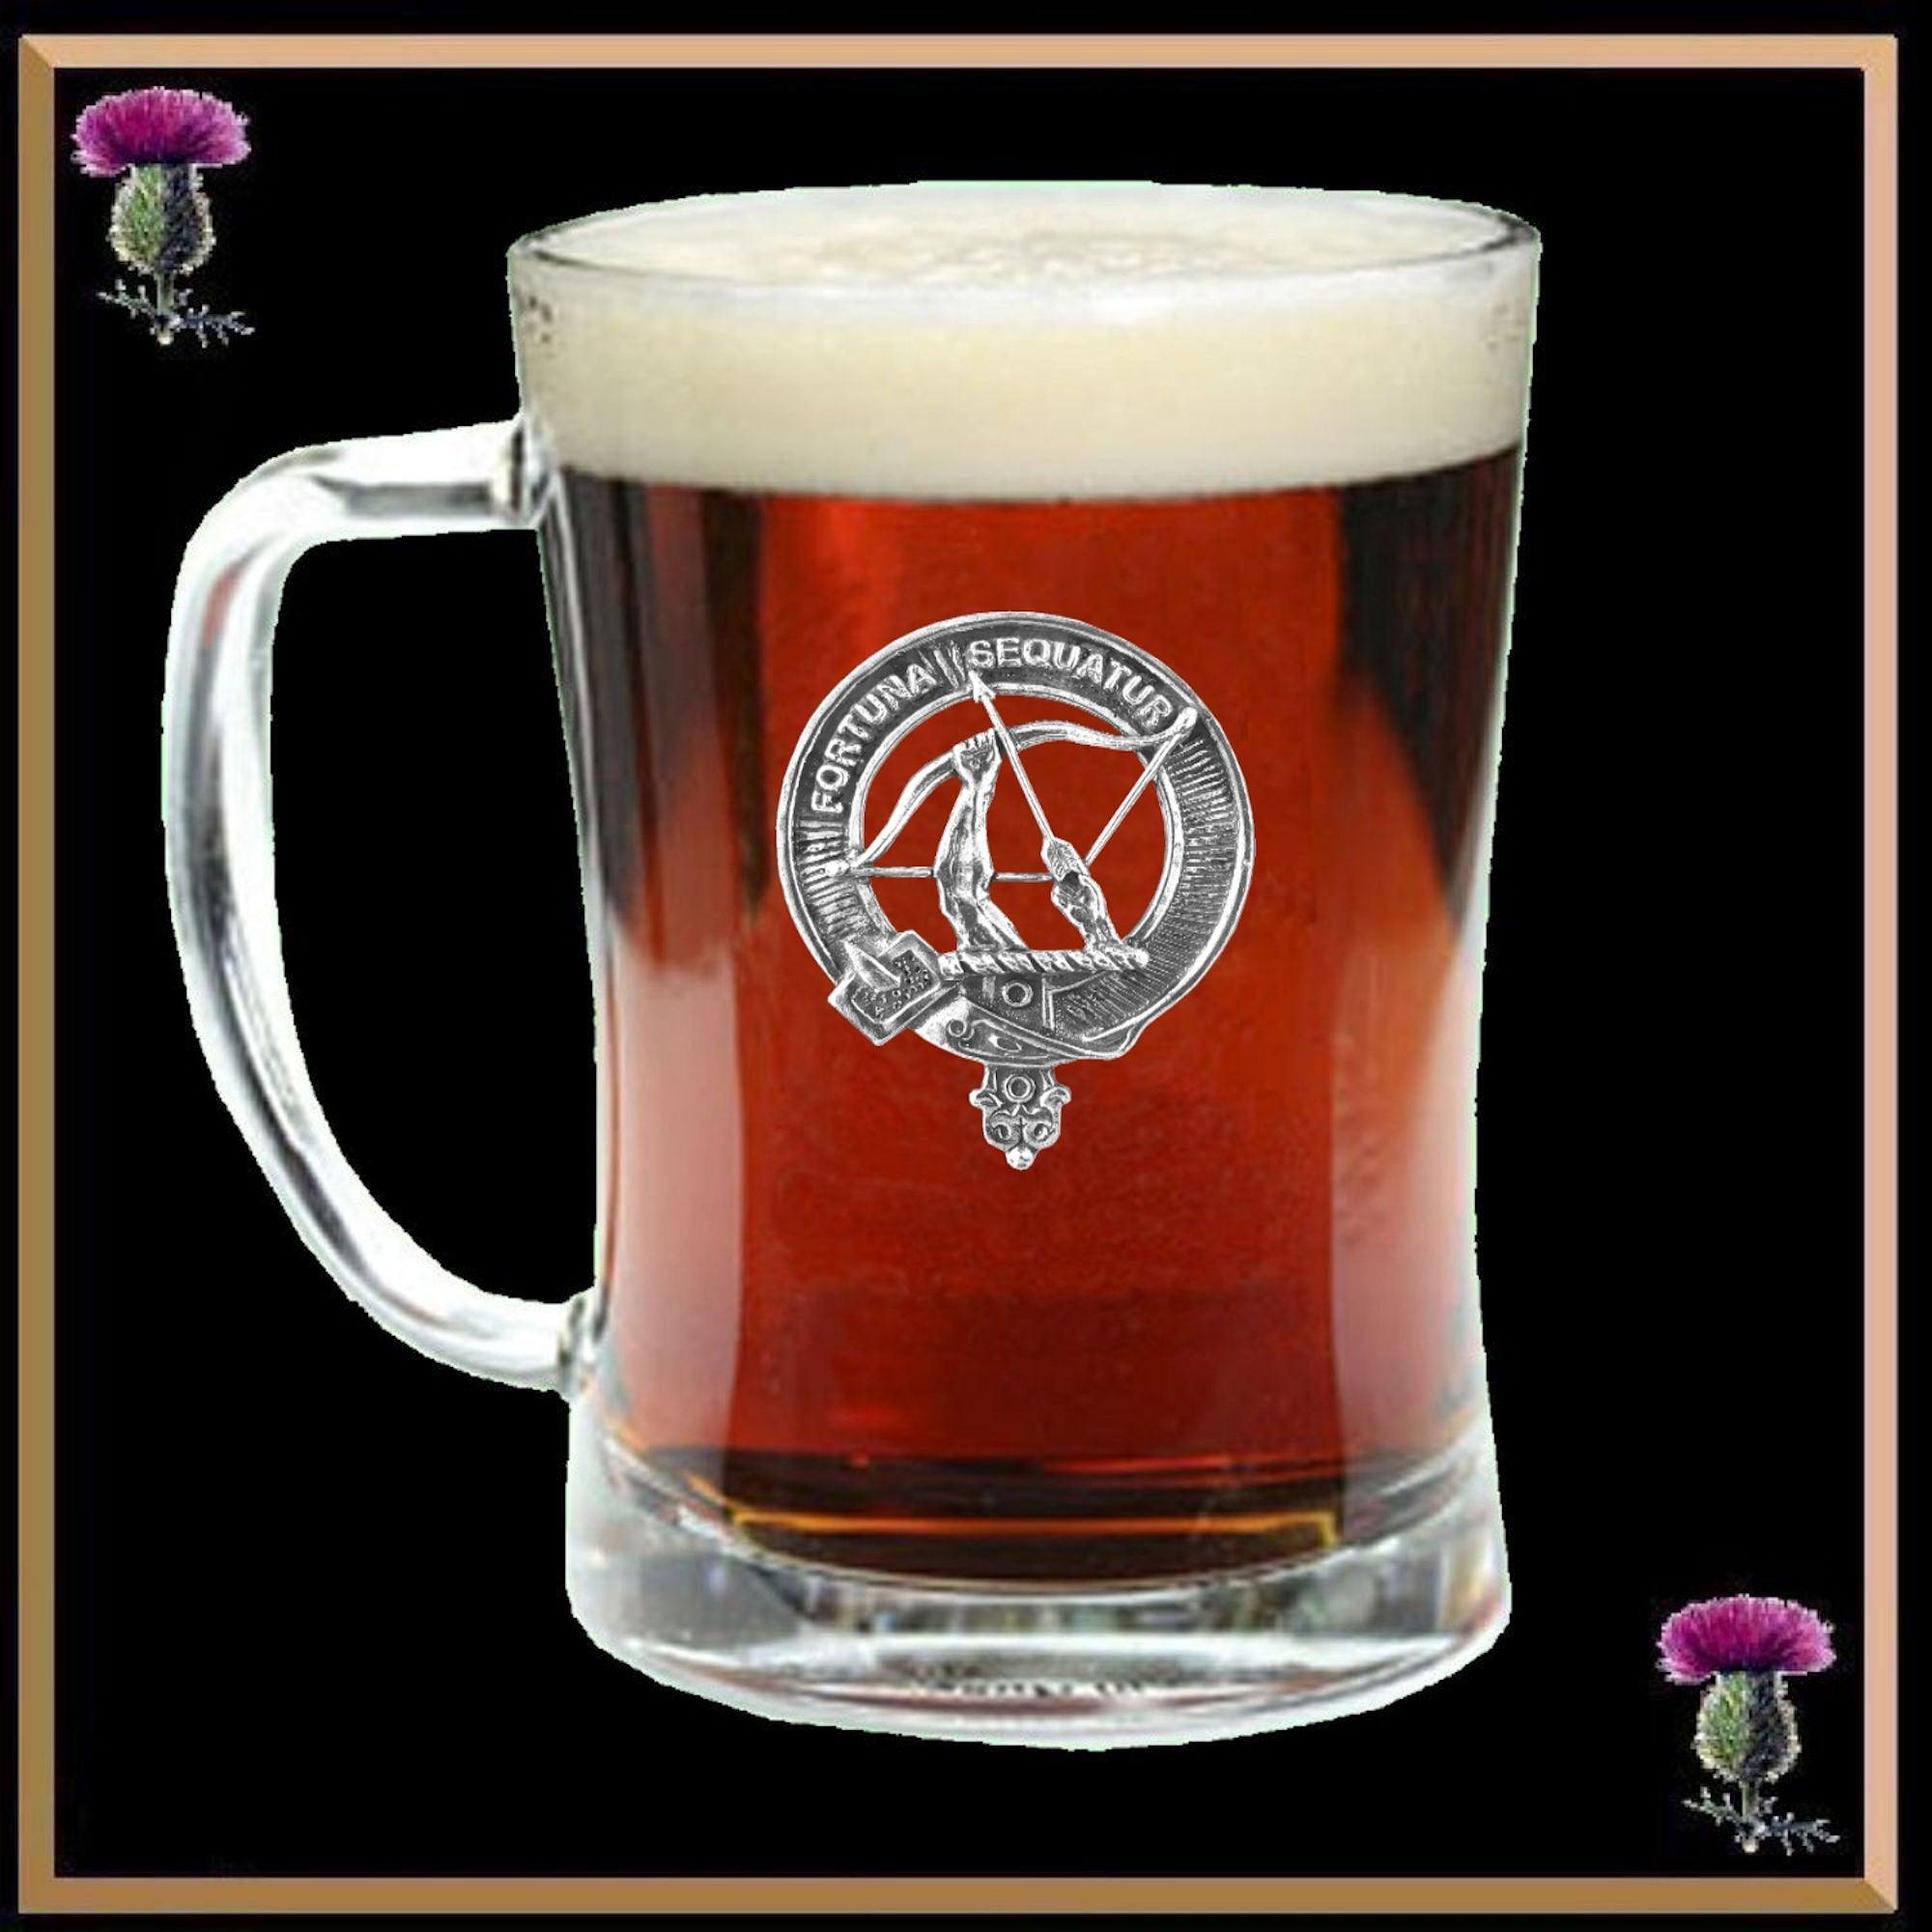 Hunter Polmood  Crest Badge Beer Mug, Scottish Glass Tankard